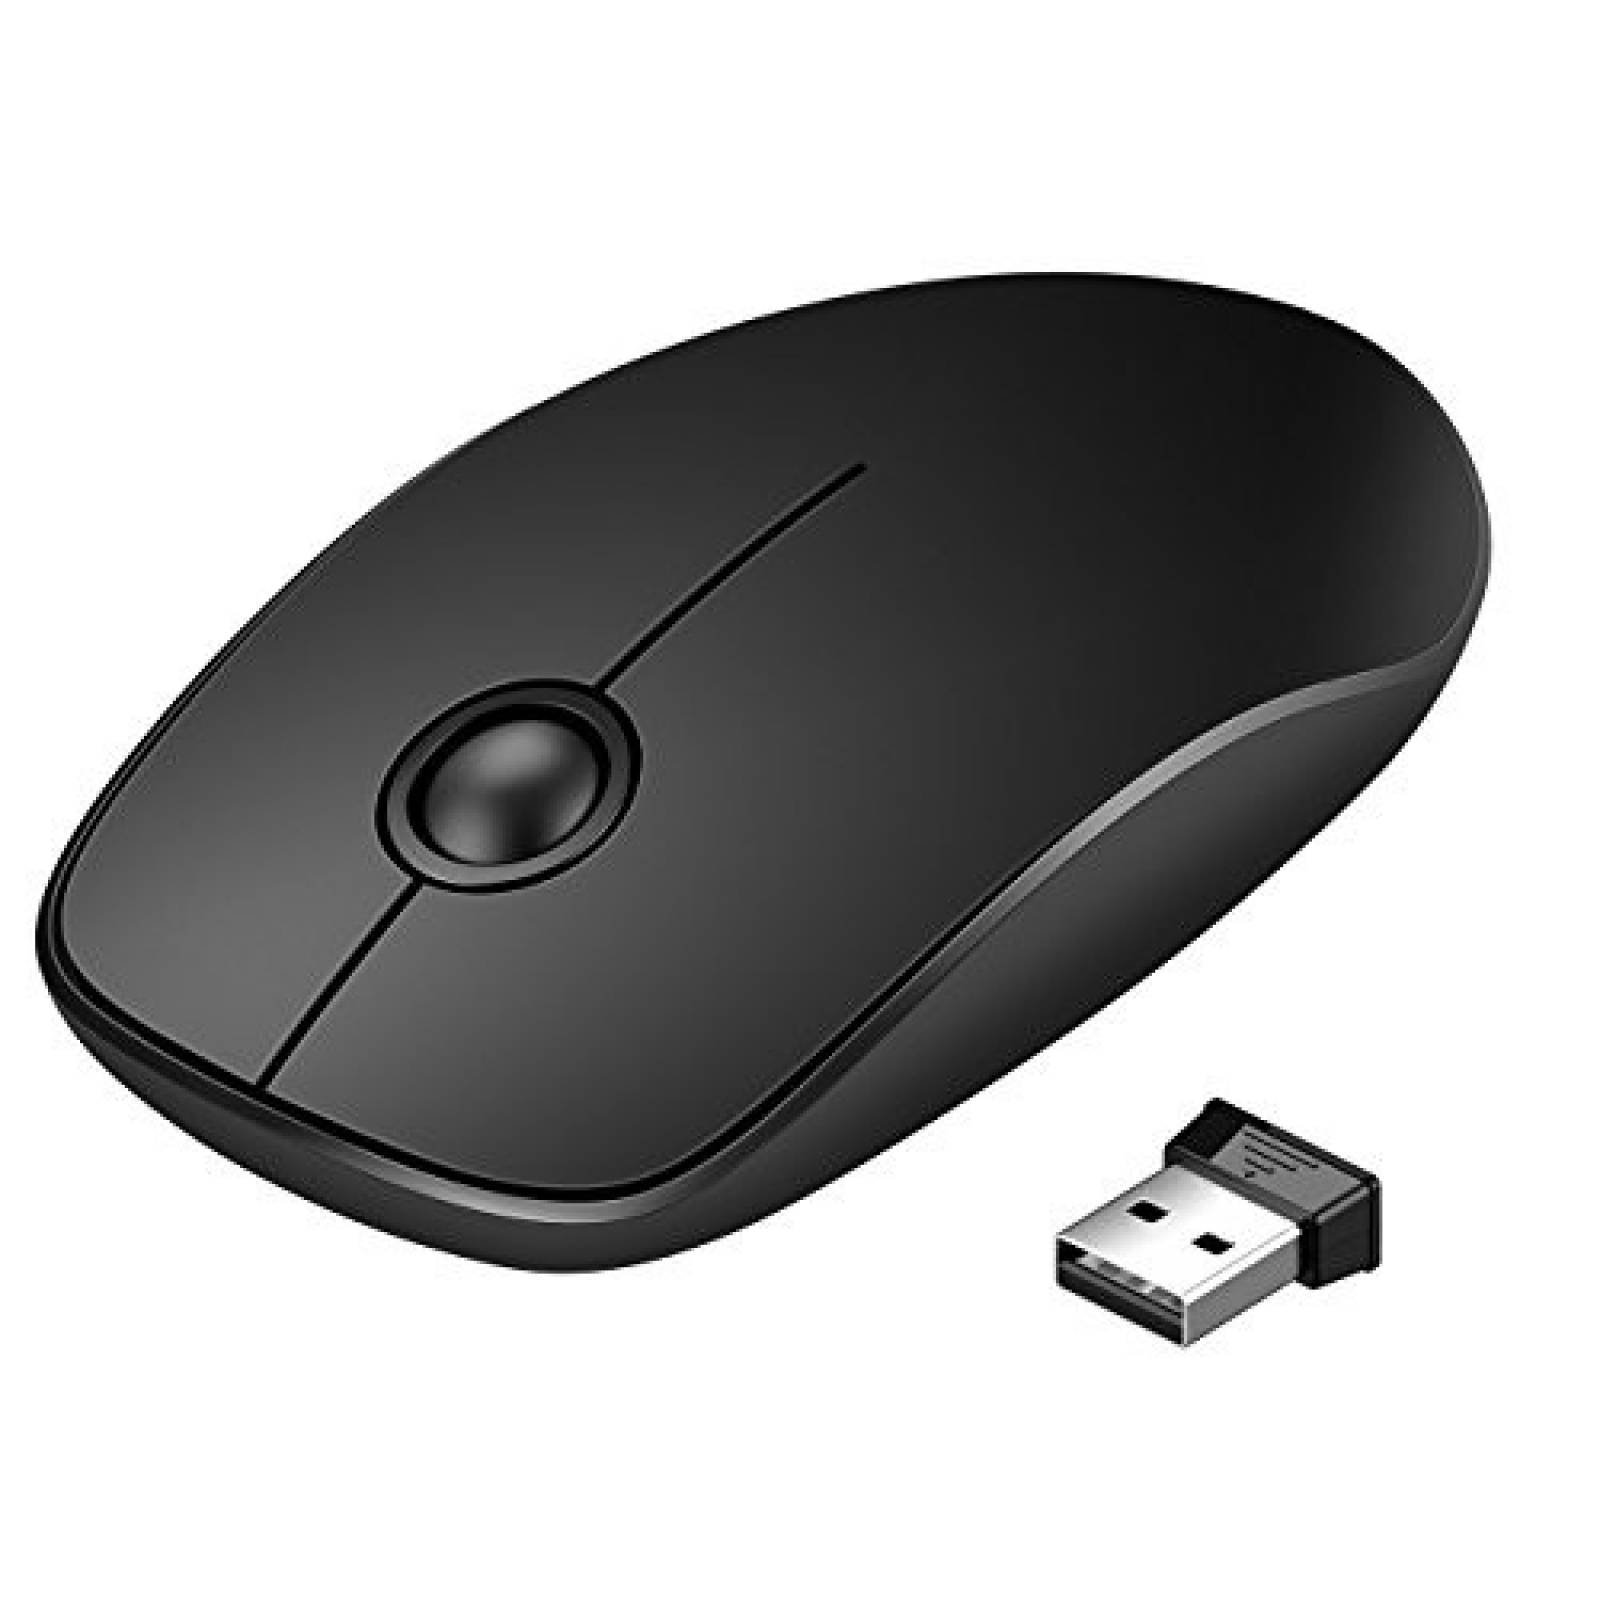 Mouse VicTsing inalámbrico receptor USB 1600 DPI -Negro